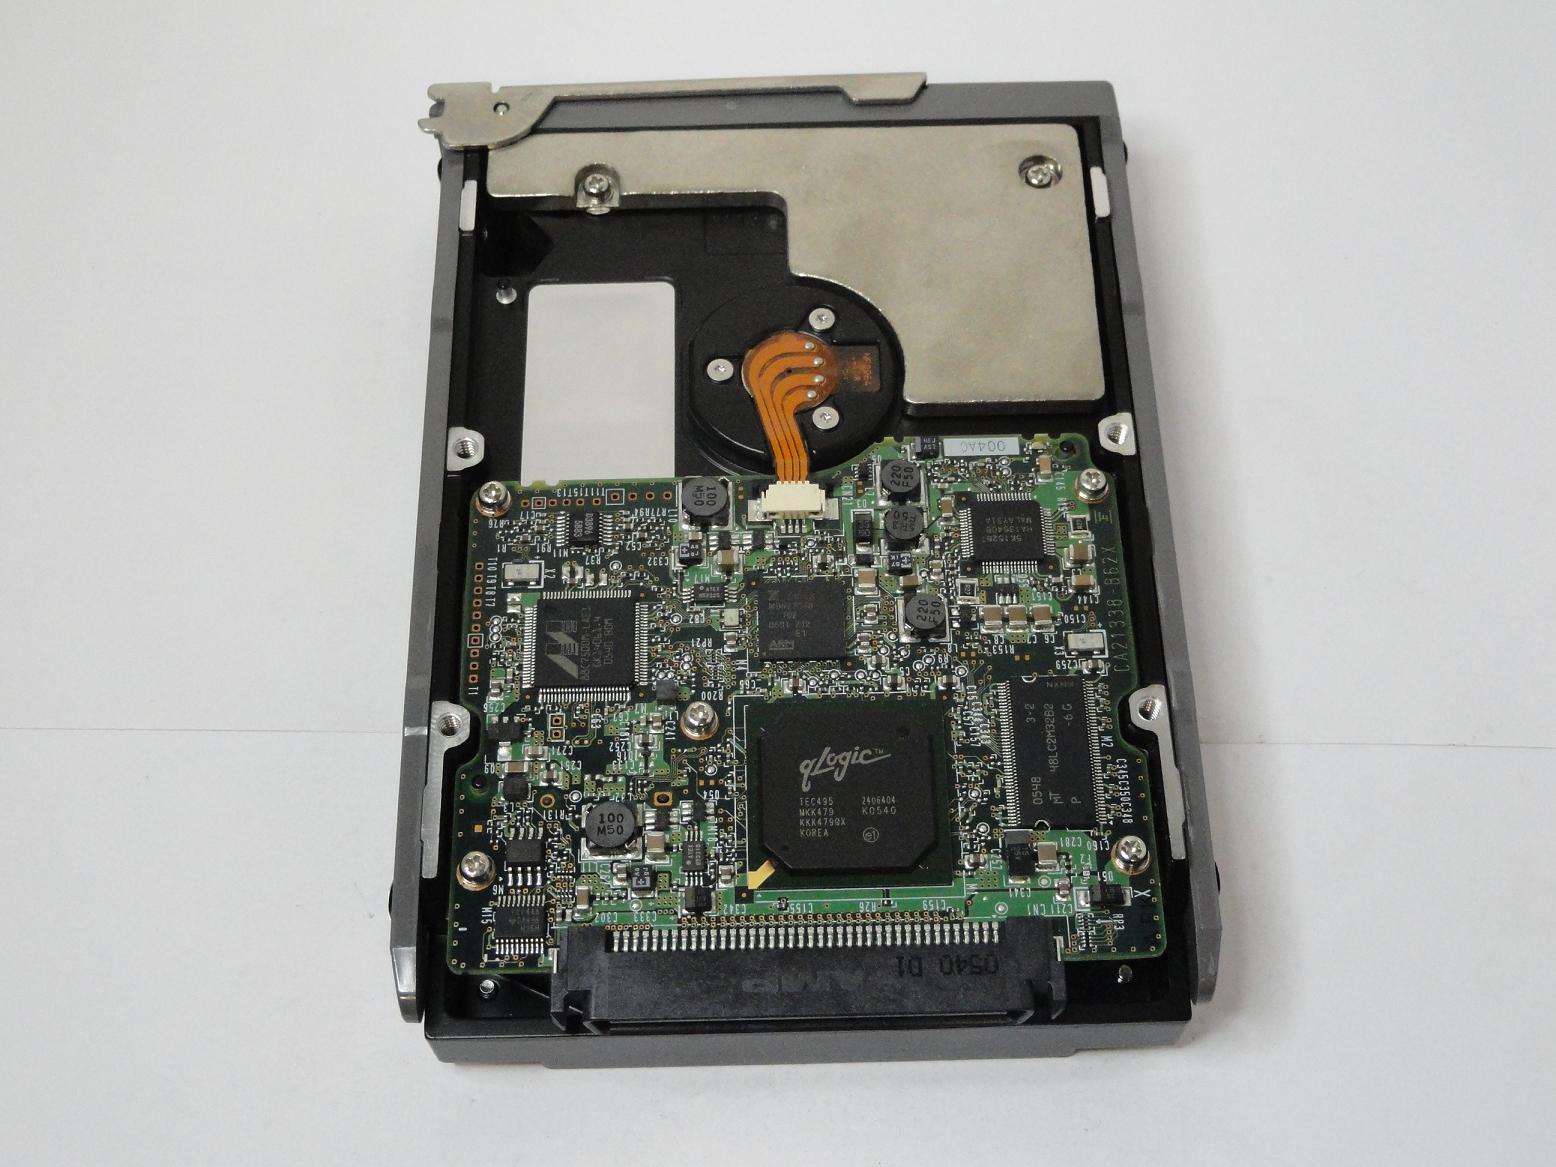 MC2812_CA06550-B22000SU_Fujitsu SUN 146GB SCSI 80 Pin 10Krpm 3.5in HDD - Image2